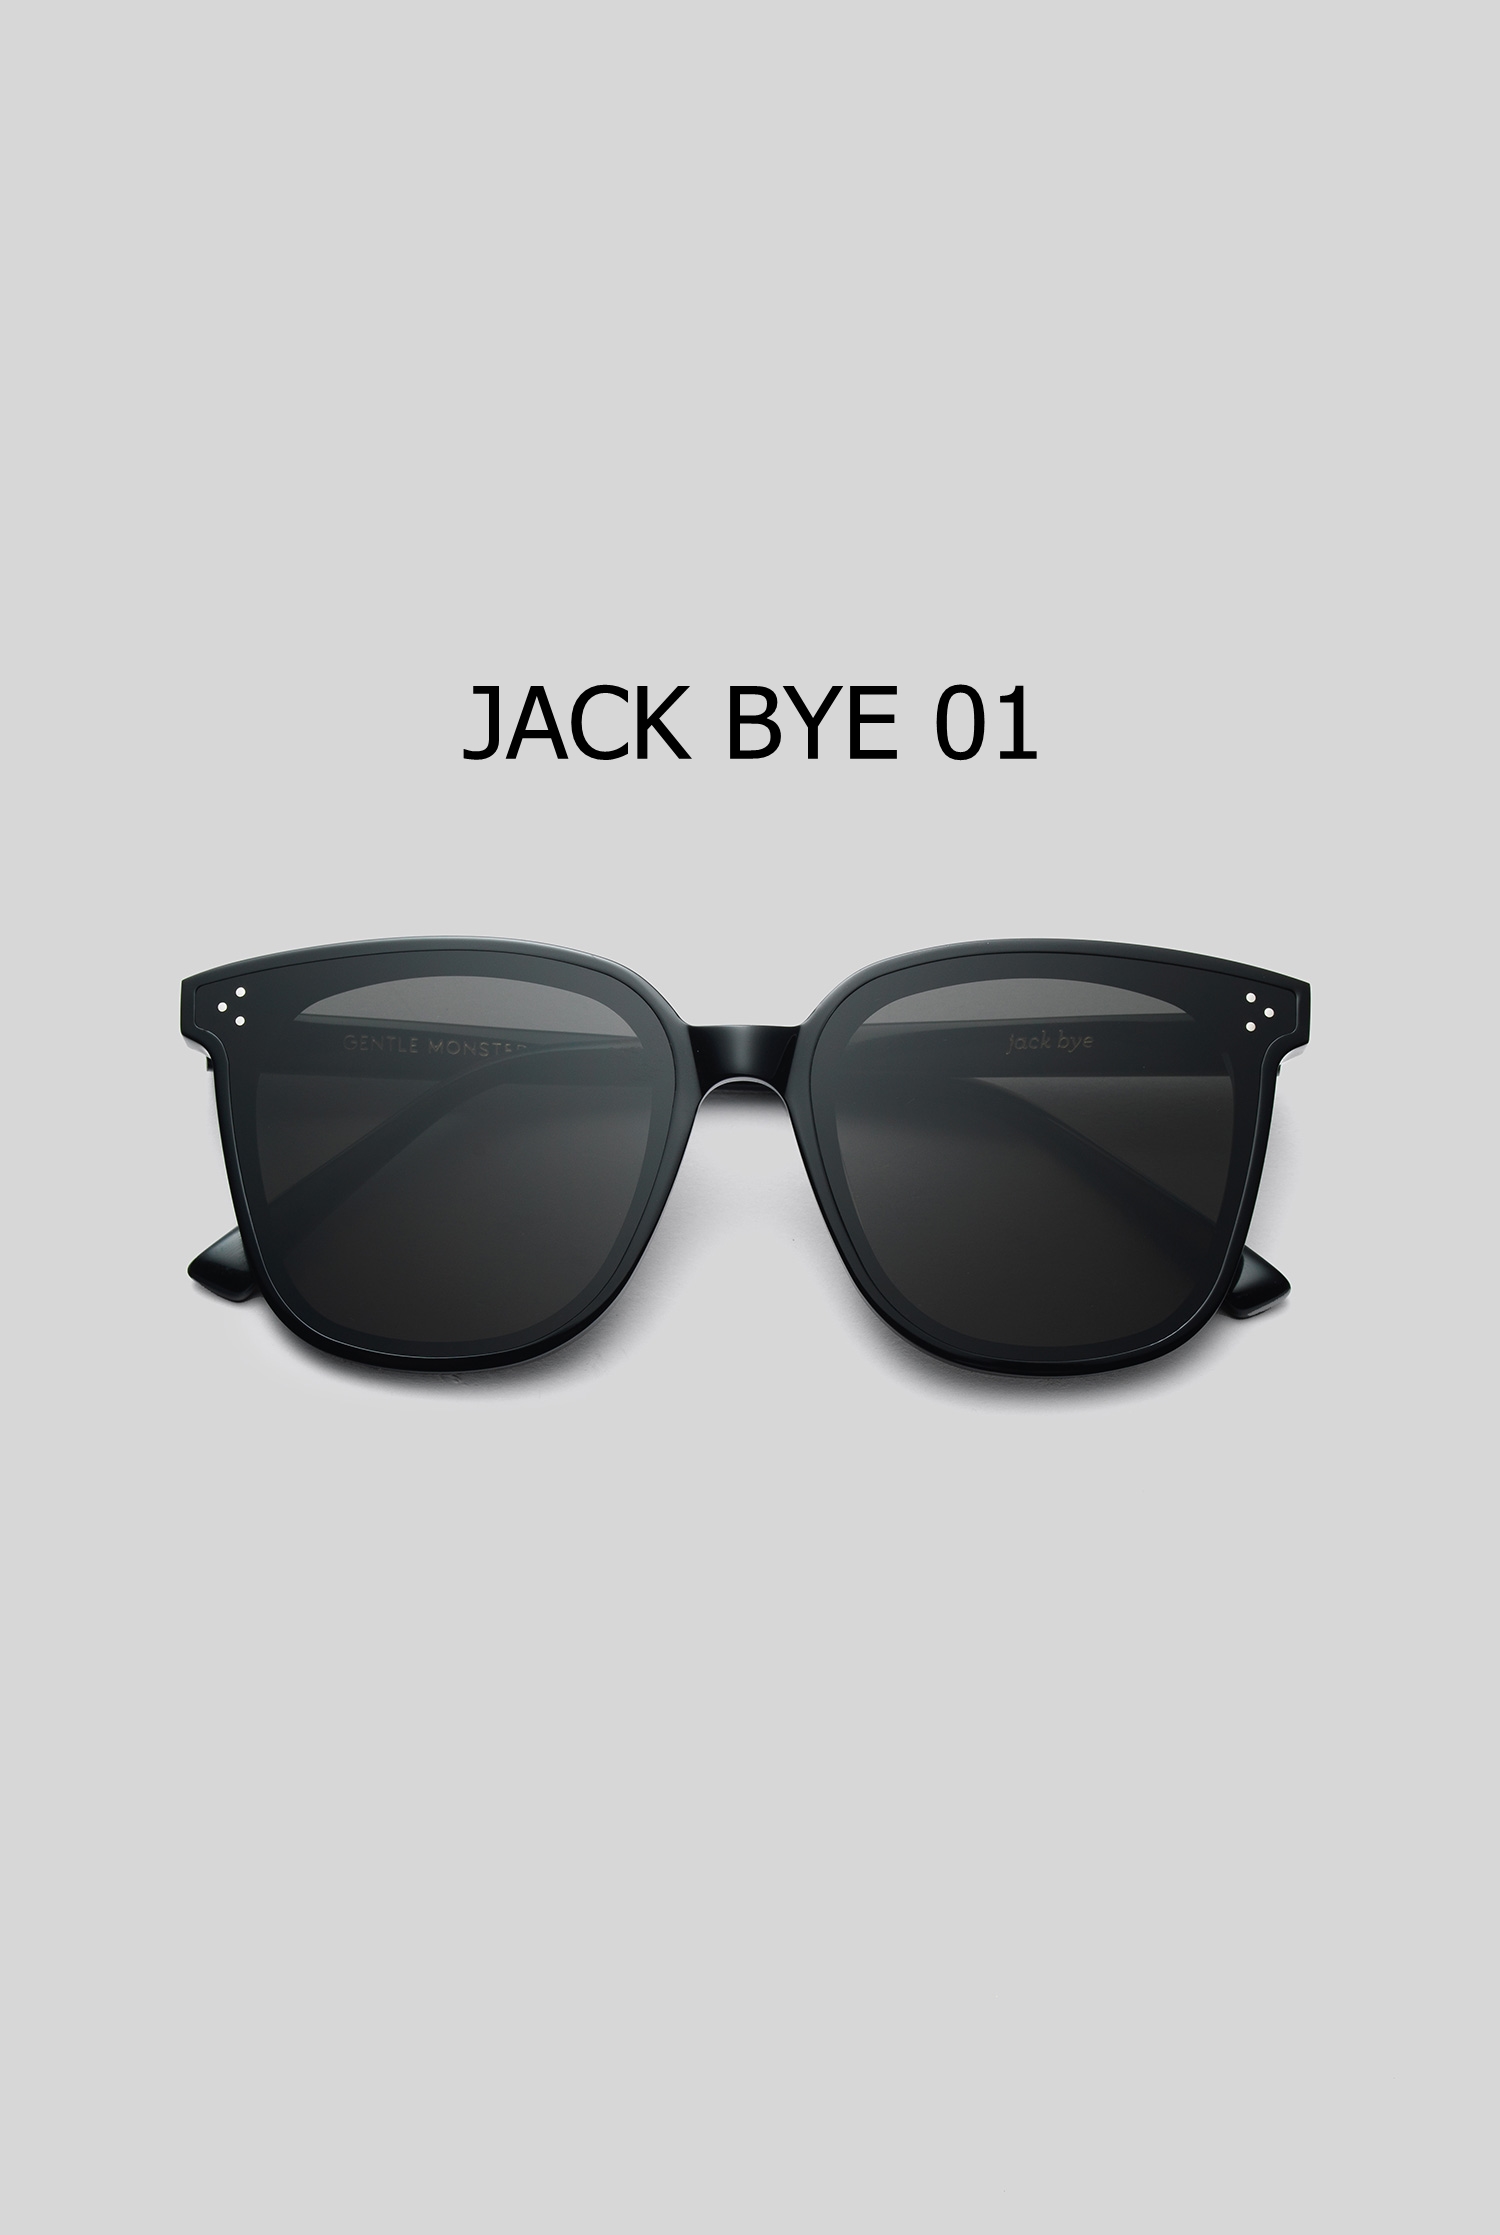 JACK BYE 01 